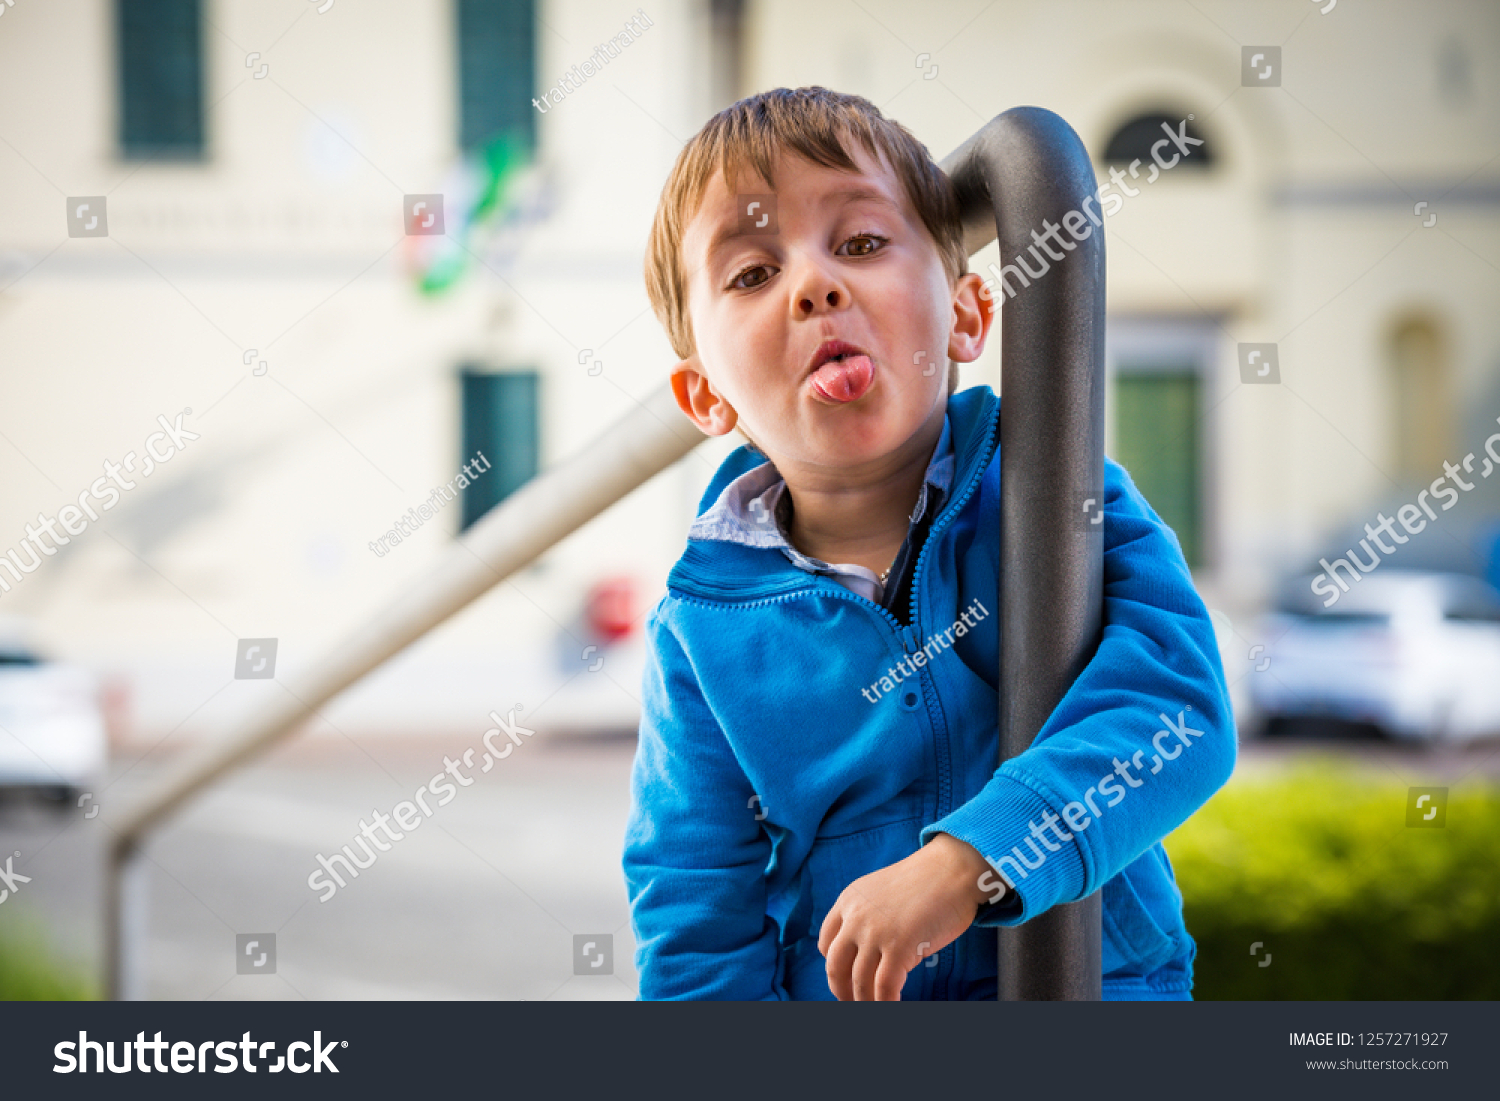 Portrait Kid Making Funny Face Stock Photo 1257271927 Shutterstock